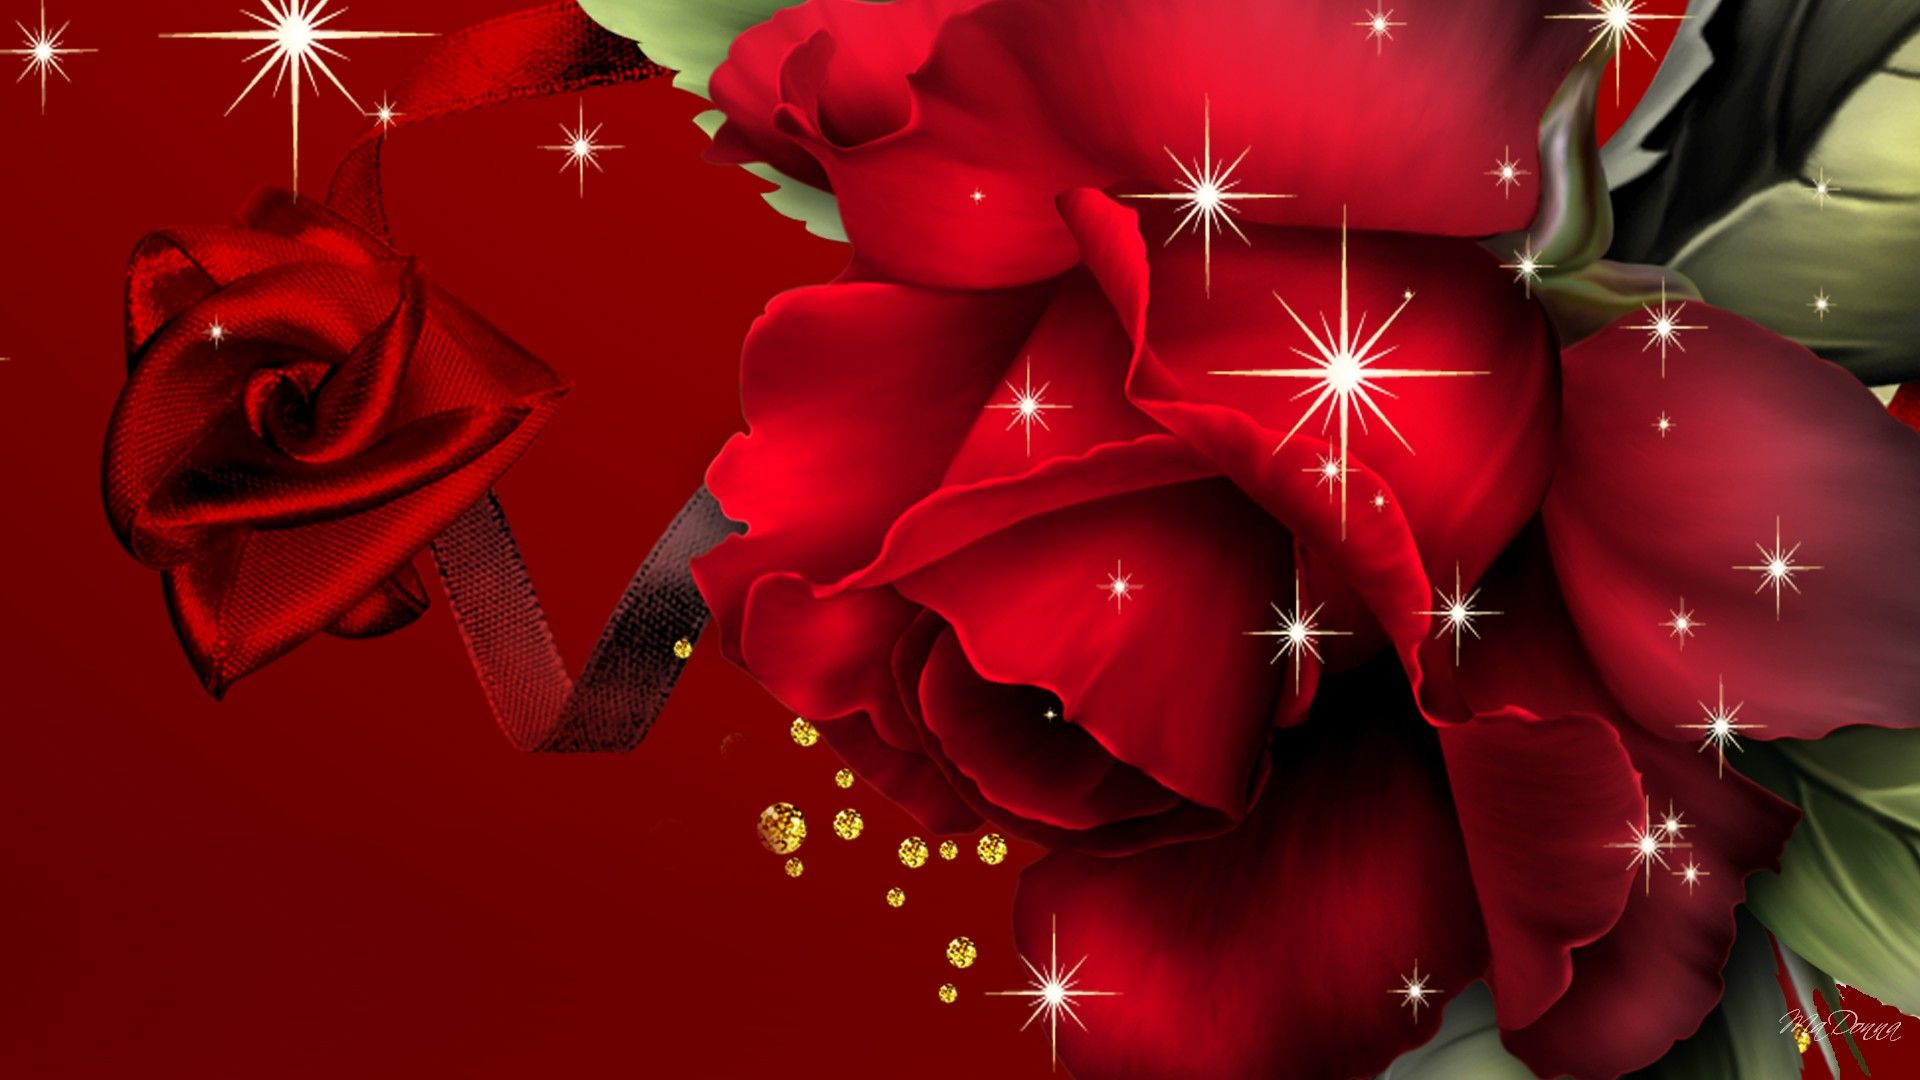 1920x1080 Red Roses Desktop Background. Pretty on WallpaperBat